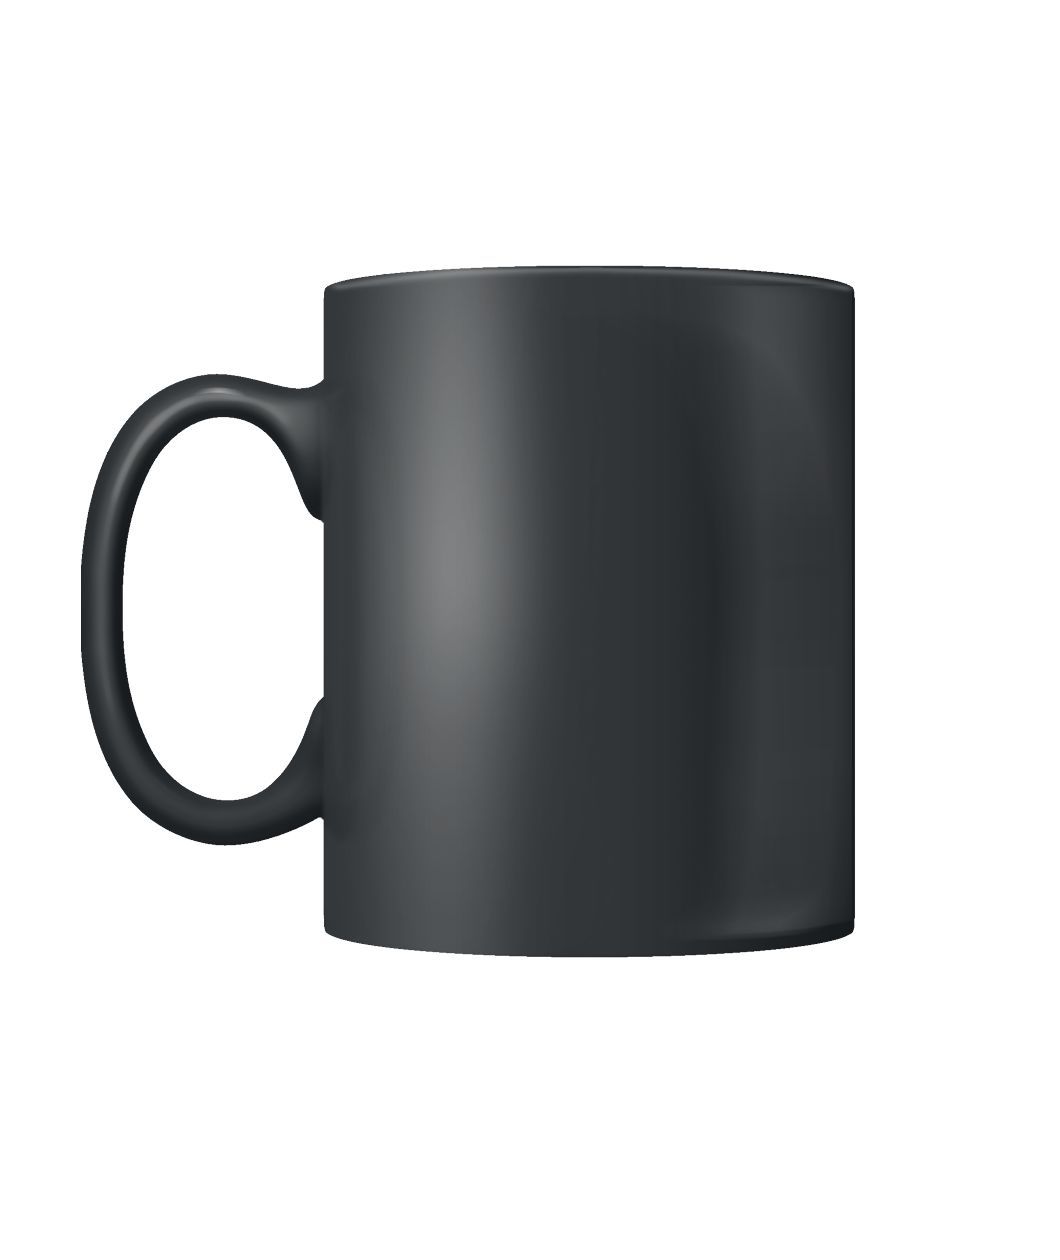 Wall-E Mug Valentine Gifts Color Coffee Mug